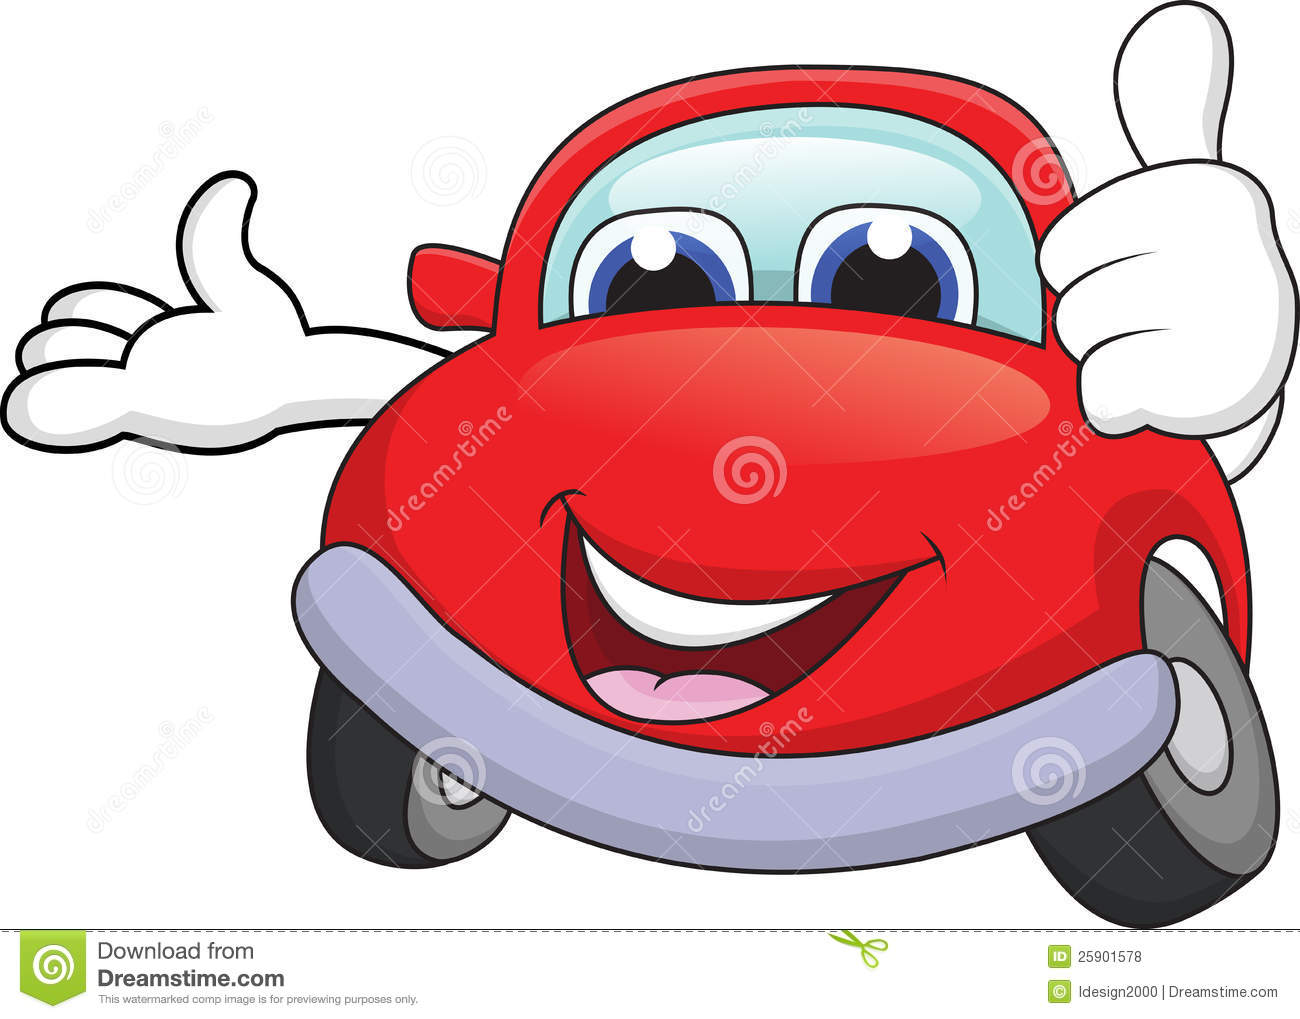 Royalty Free Stock Photos  Car Cartoon With Thumb Up  Image  25901578